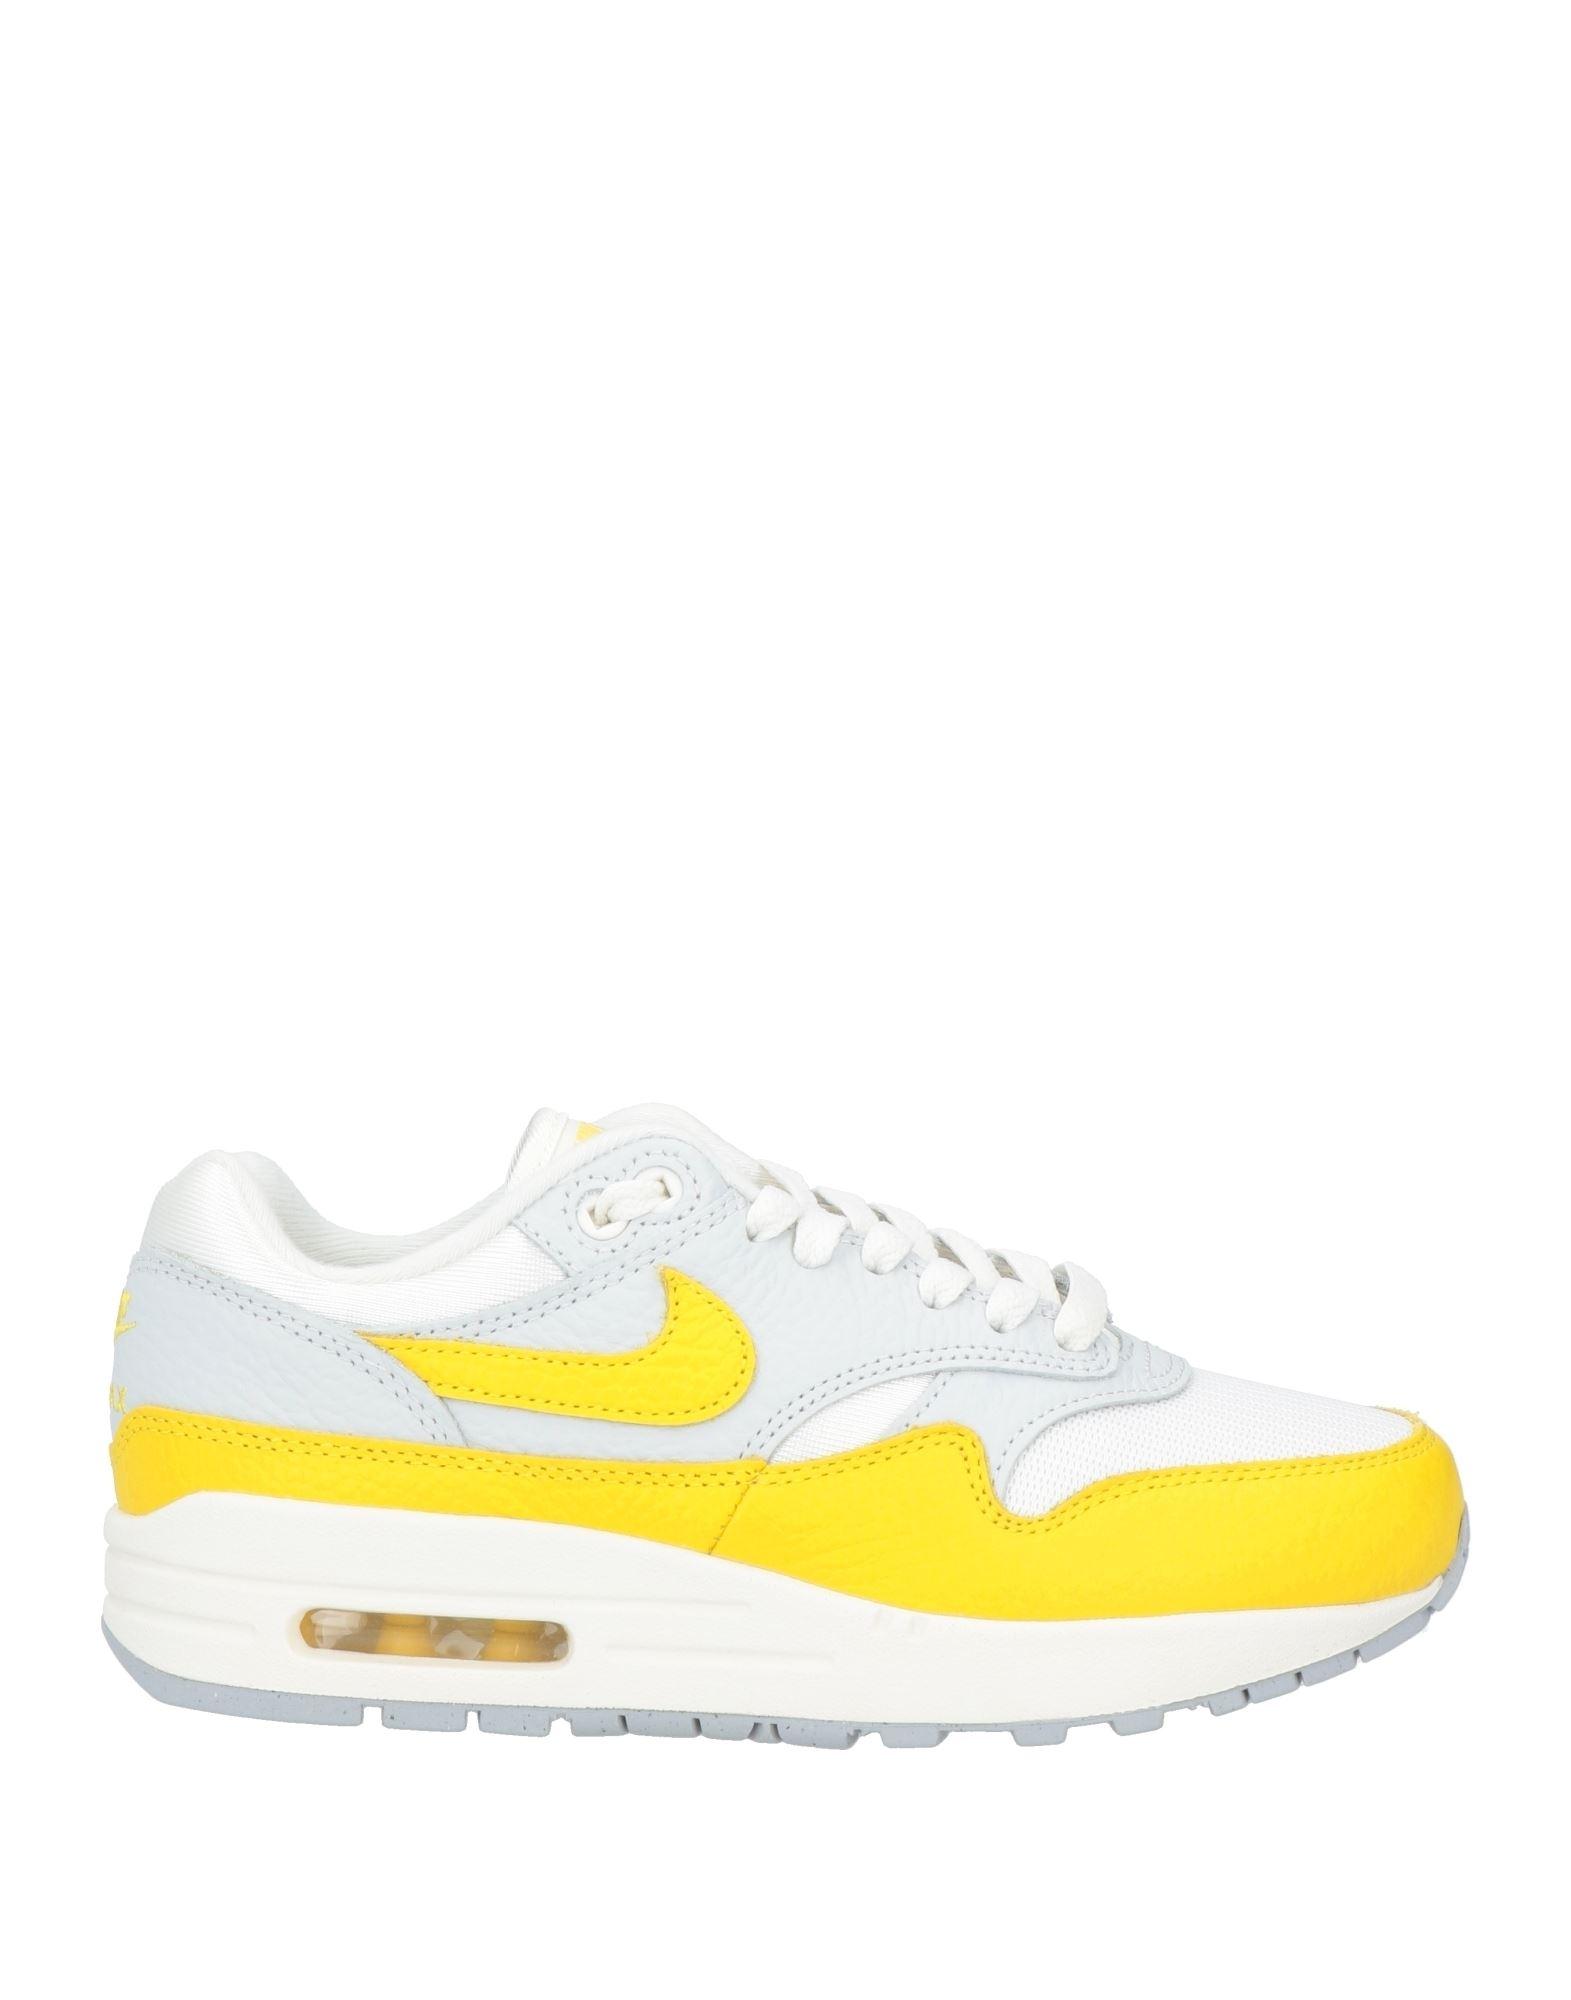 Nike Sneakers in Yellow | Lyst Australia